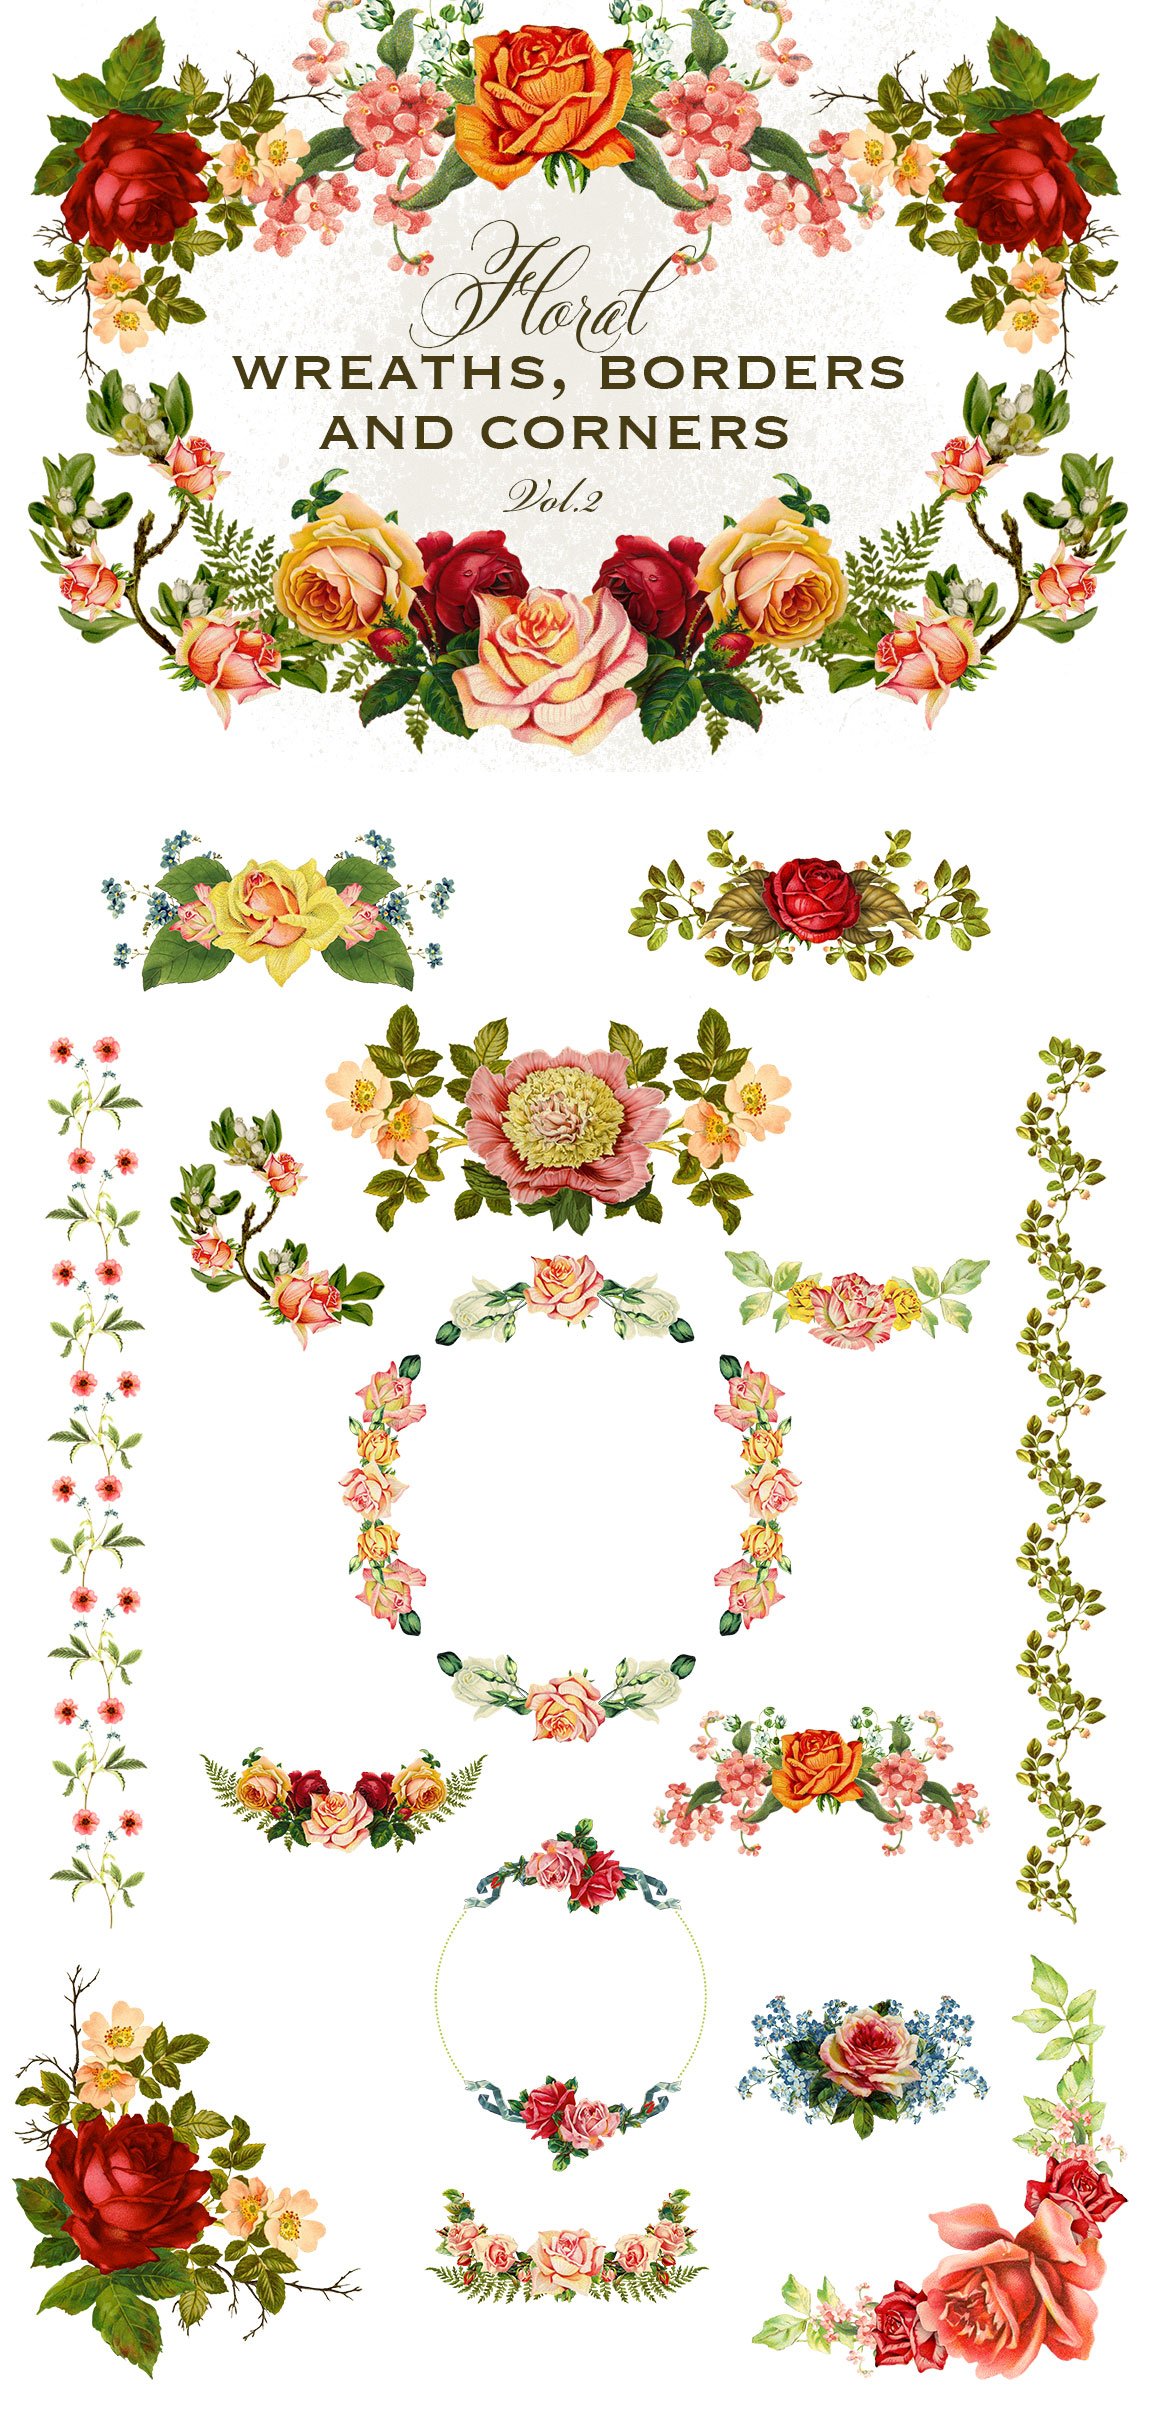 水彩花卉素材插画 Floral Wreaths Border